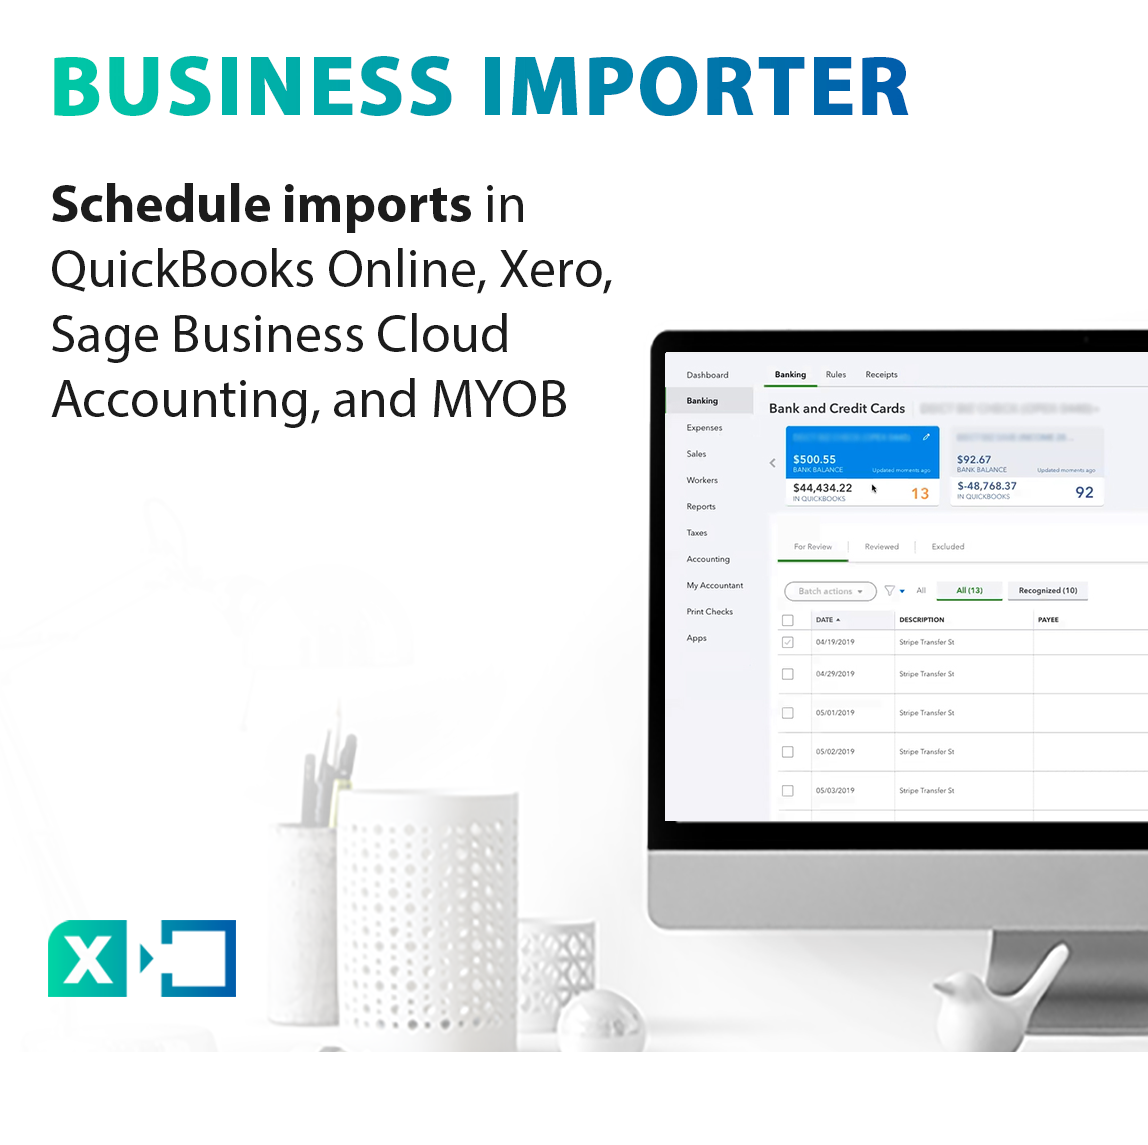 Schedule imports in QuickBooks Online